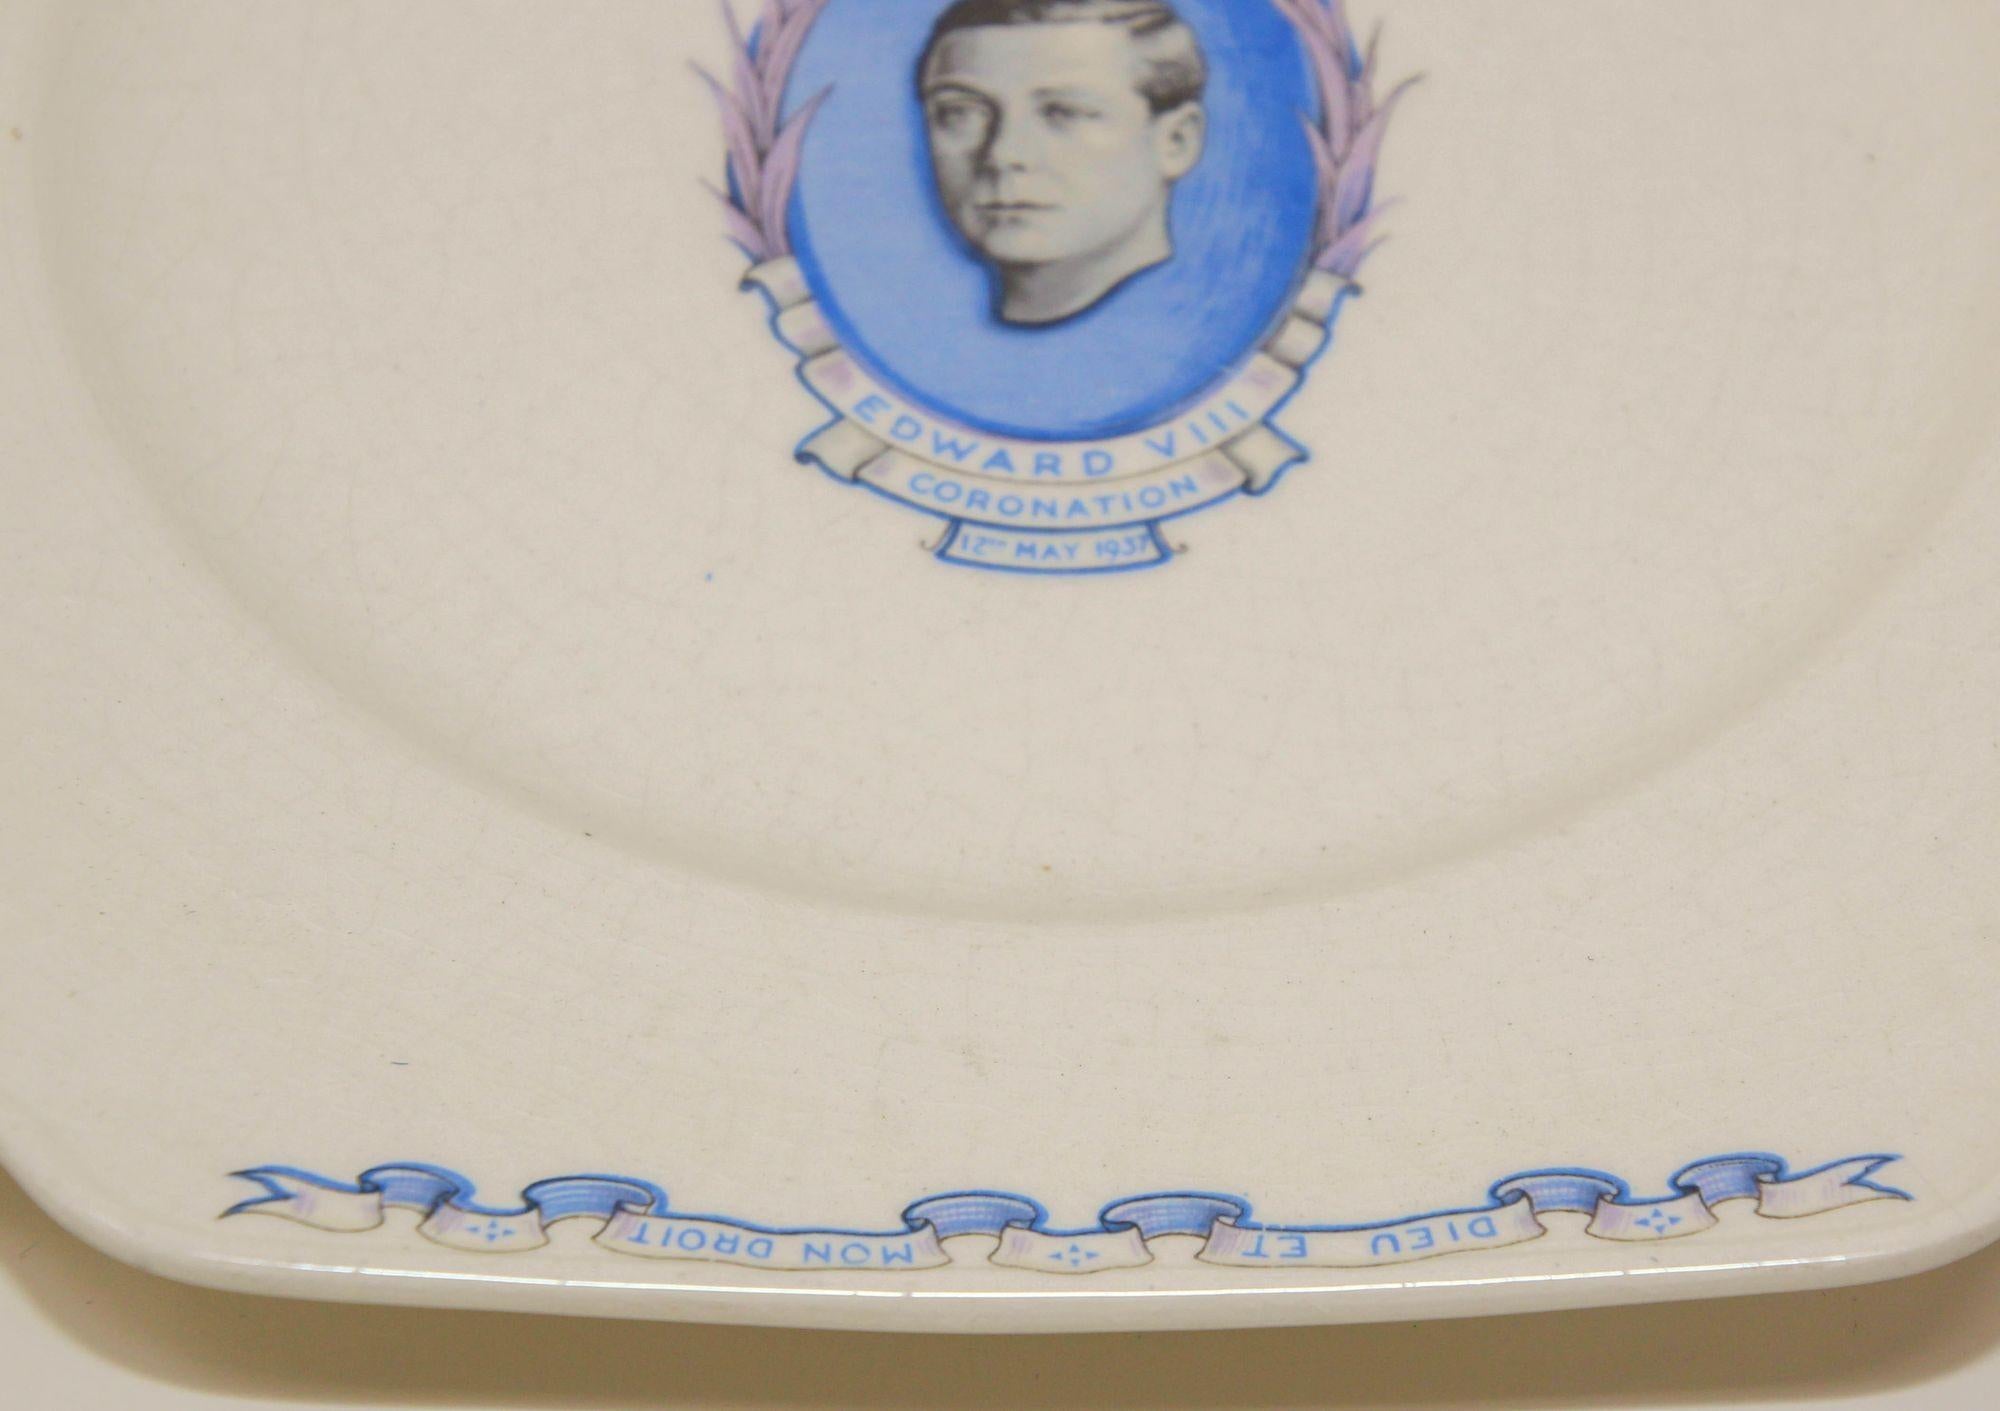 Victorian Royal Collectible Porcelain Coronation Plate Edward VIII 1936 Wedgewood England